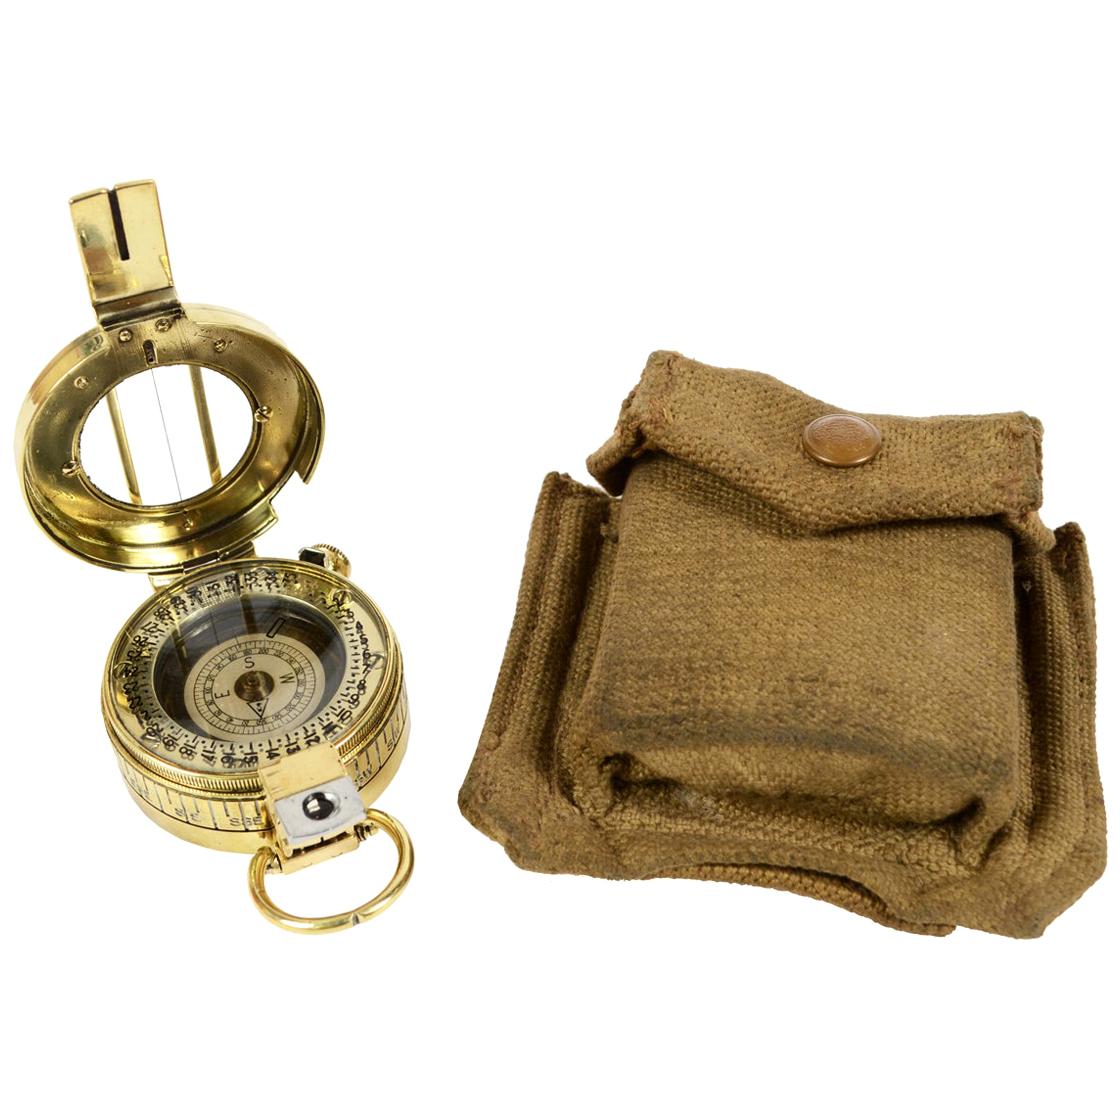 Brass Compass 1945 with Original Green Fabric Case